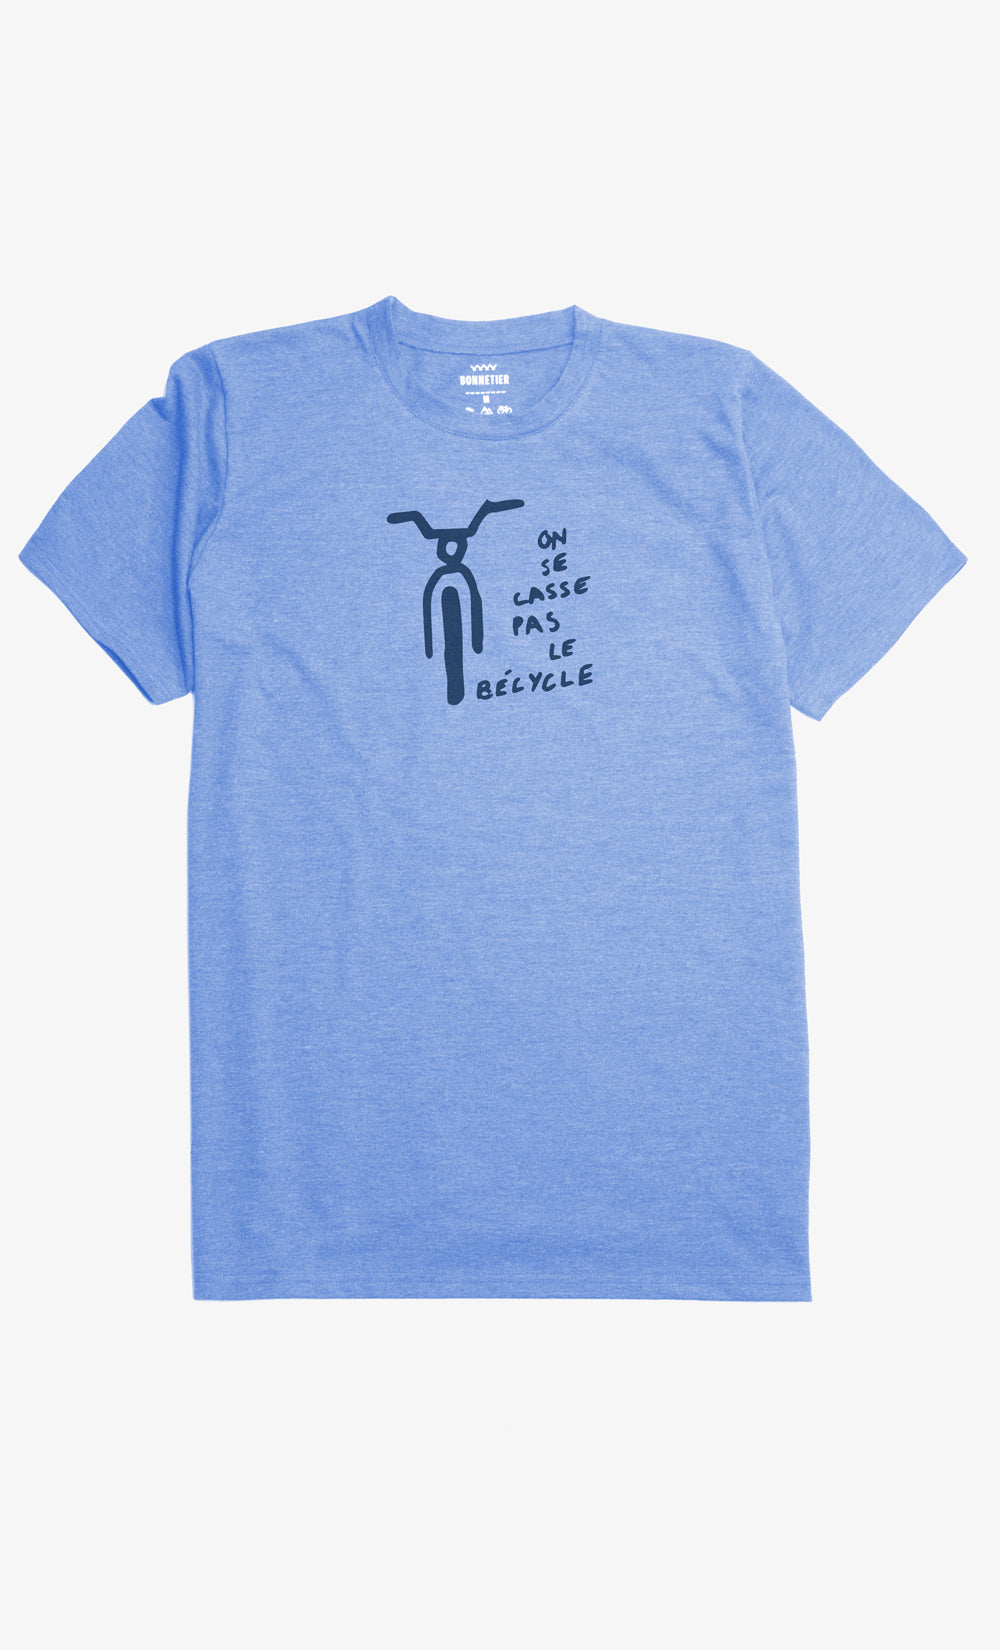 Men's T-shirt - BÉCYCLE - Powder Blue